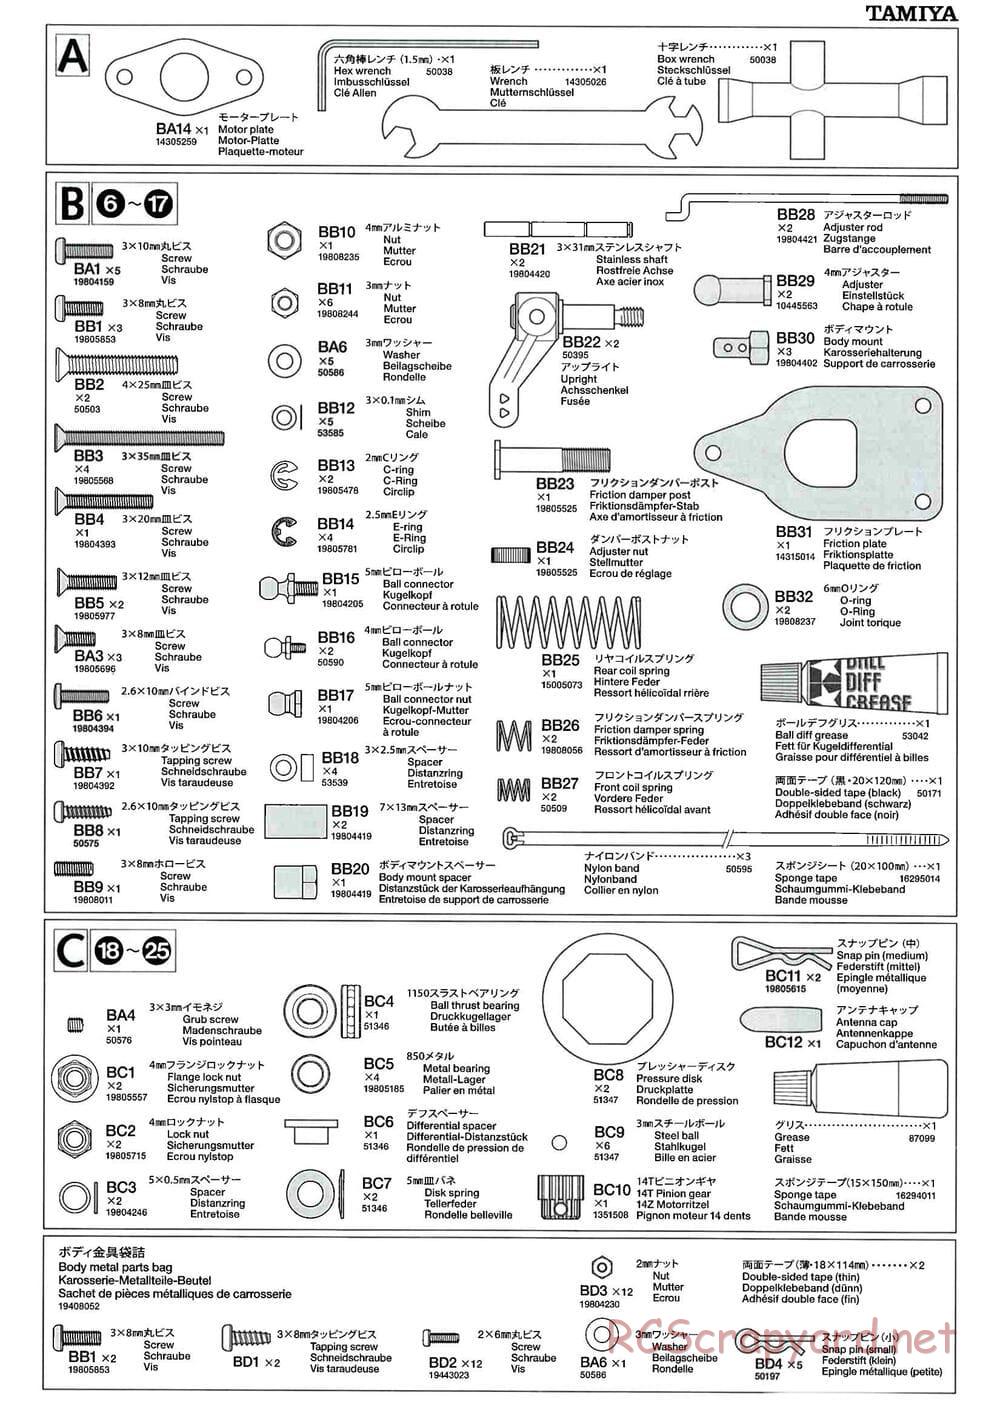 Tamiya - F104W Chassis - Manual - Page 18